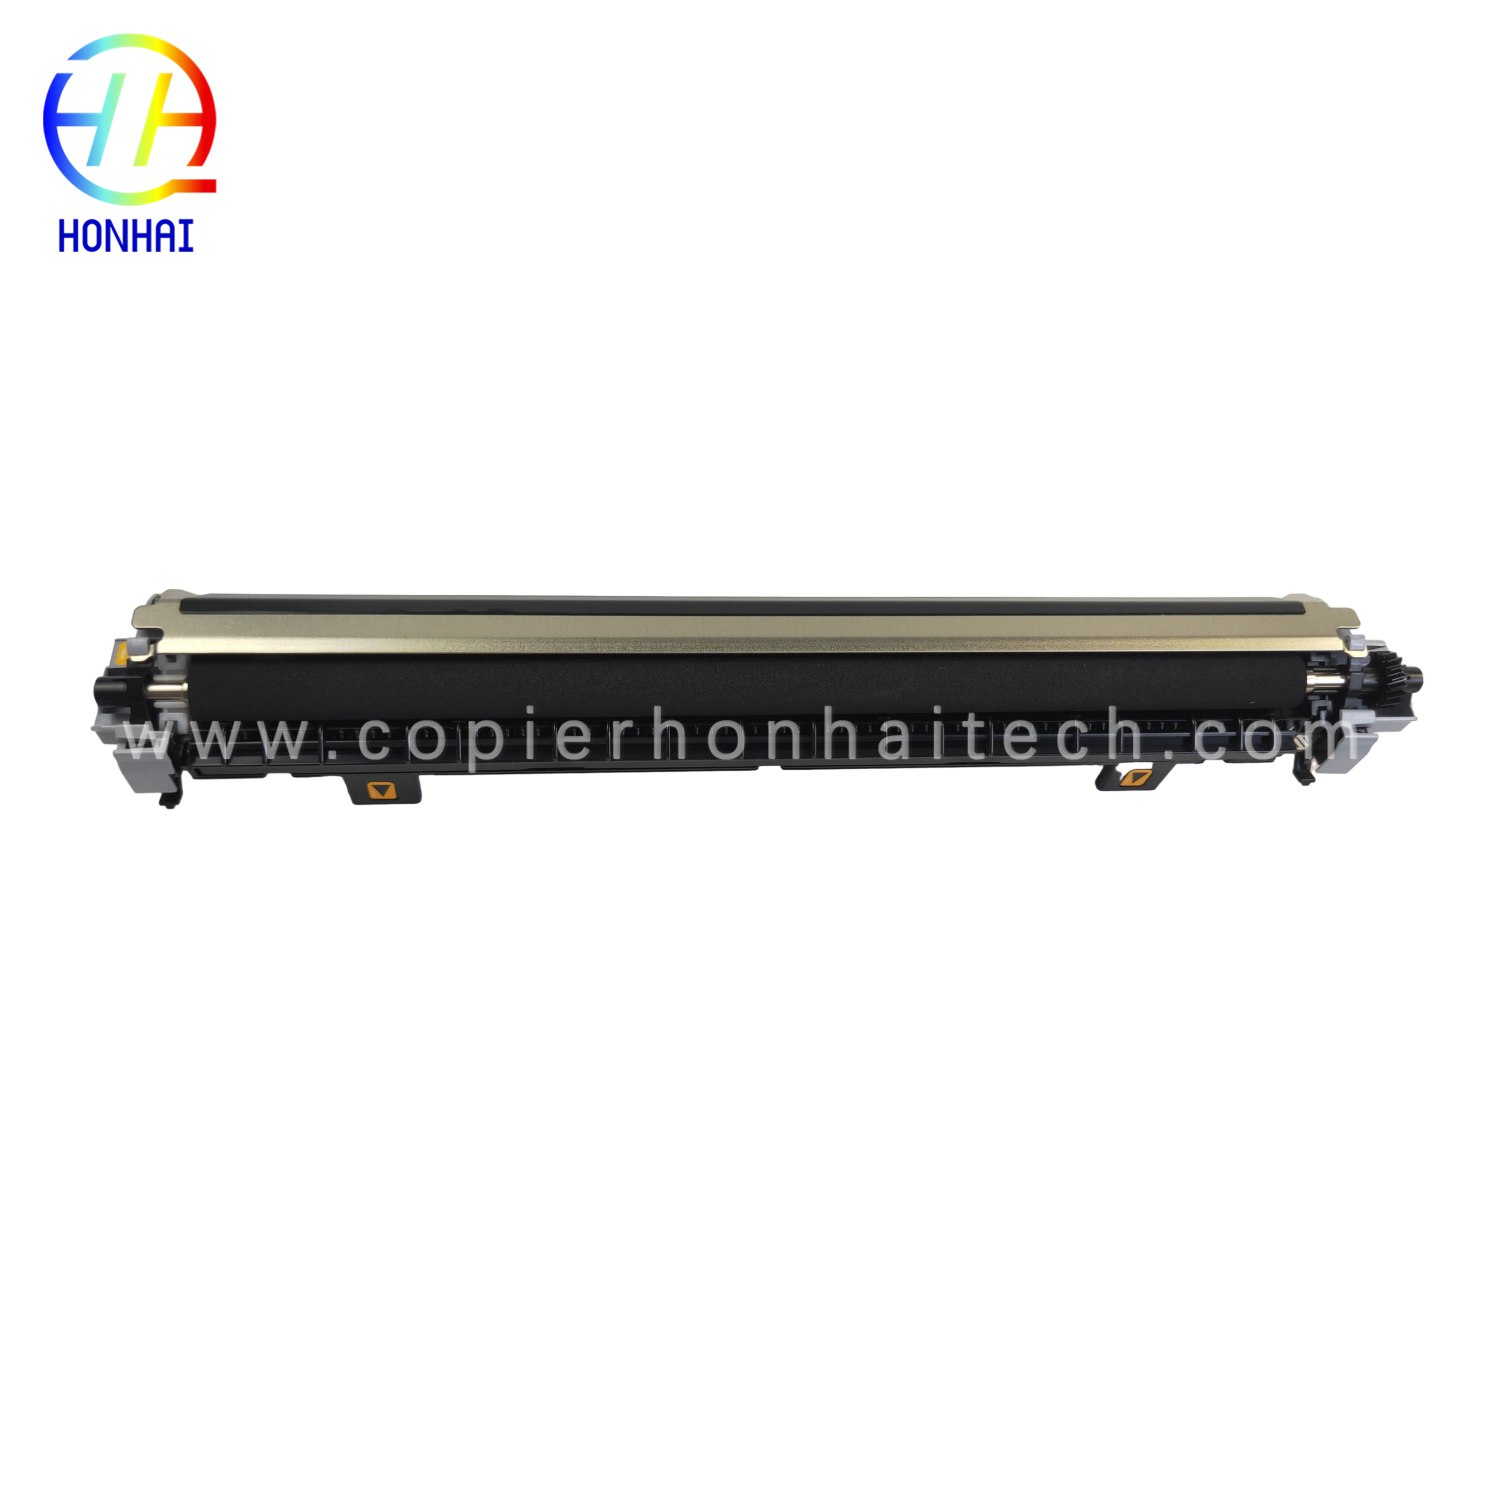 https://www.copierhonhaitech.com/upper-fuser-roller-for-kyocera-ta3010i-3510i-product/